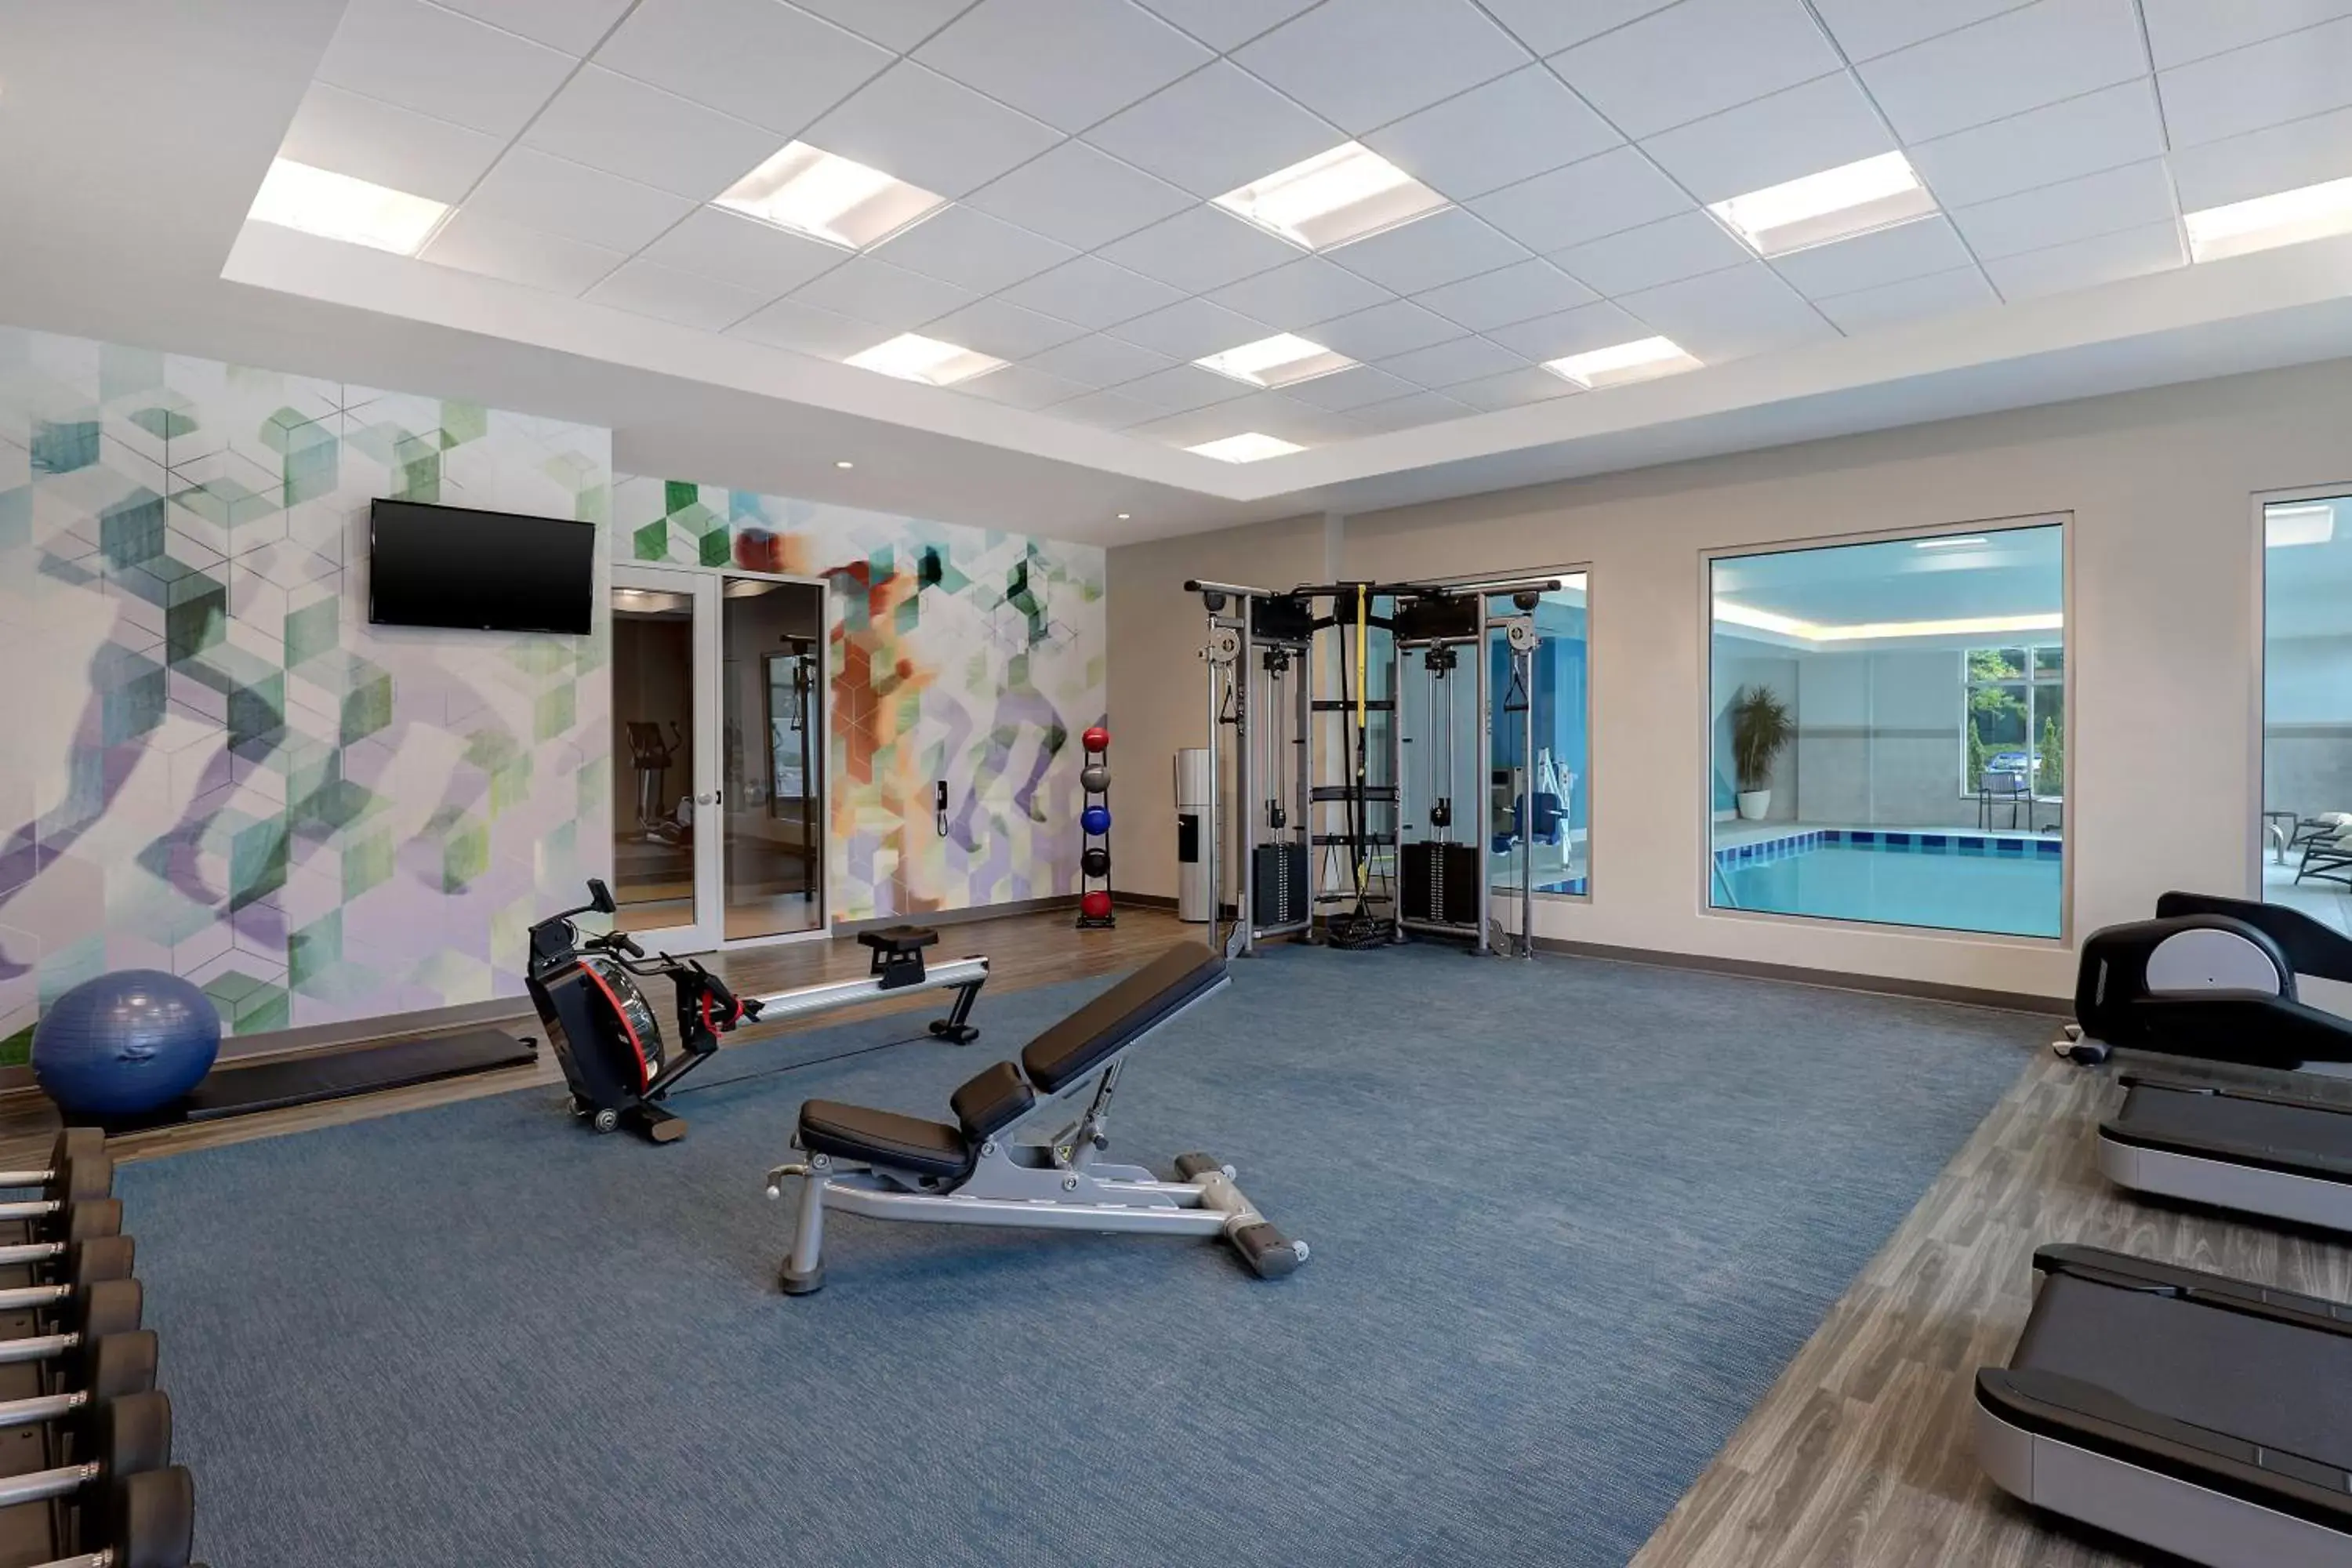 Fitness centre/facilities, Fitness Center/Facilities in Hyatt Place Ottawa West